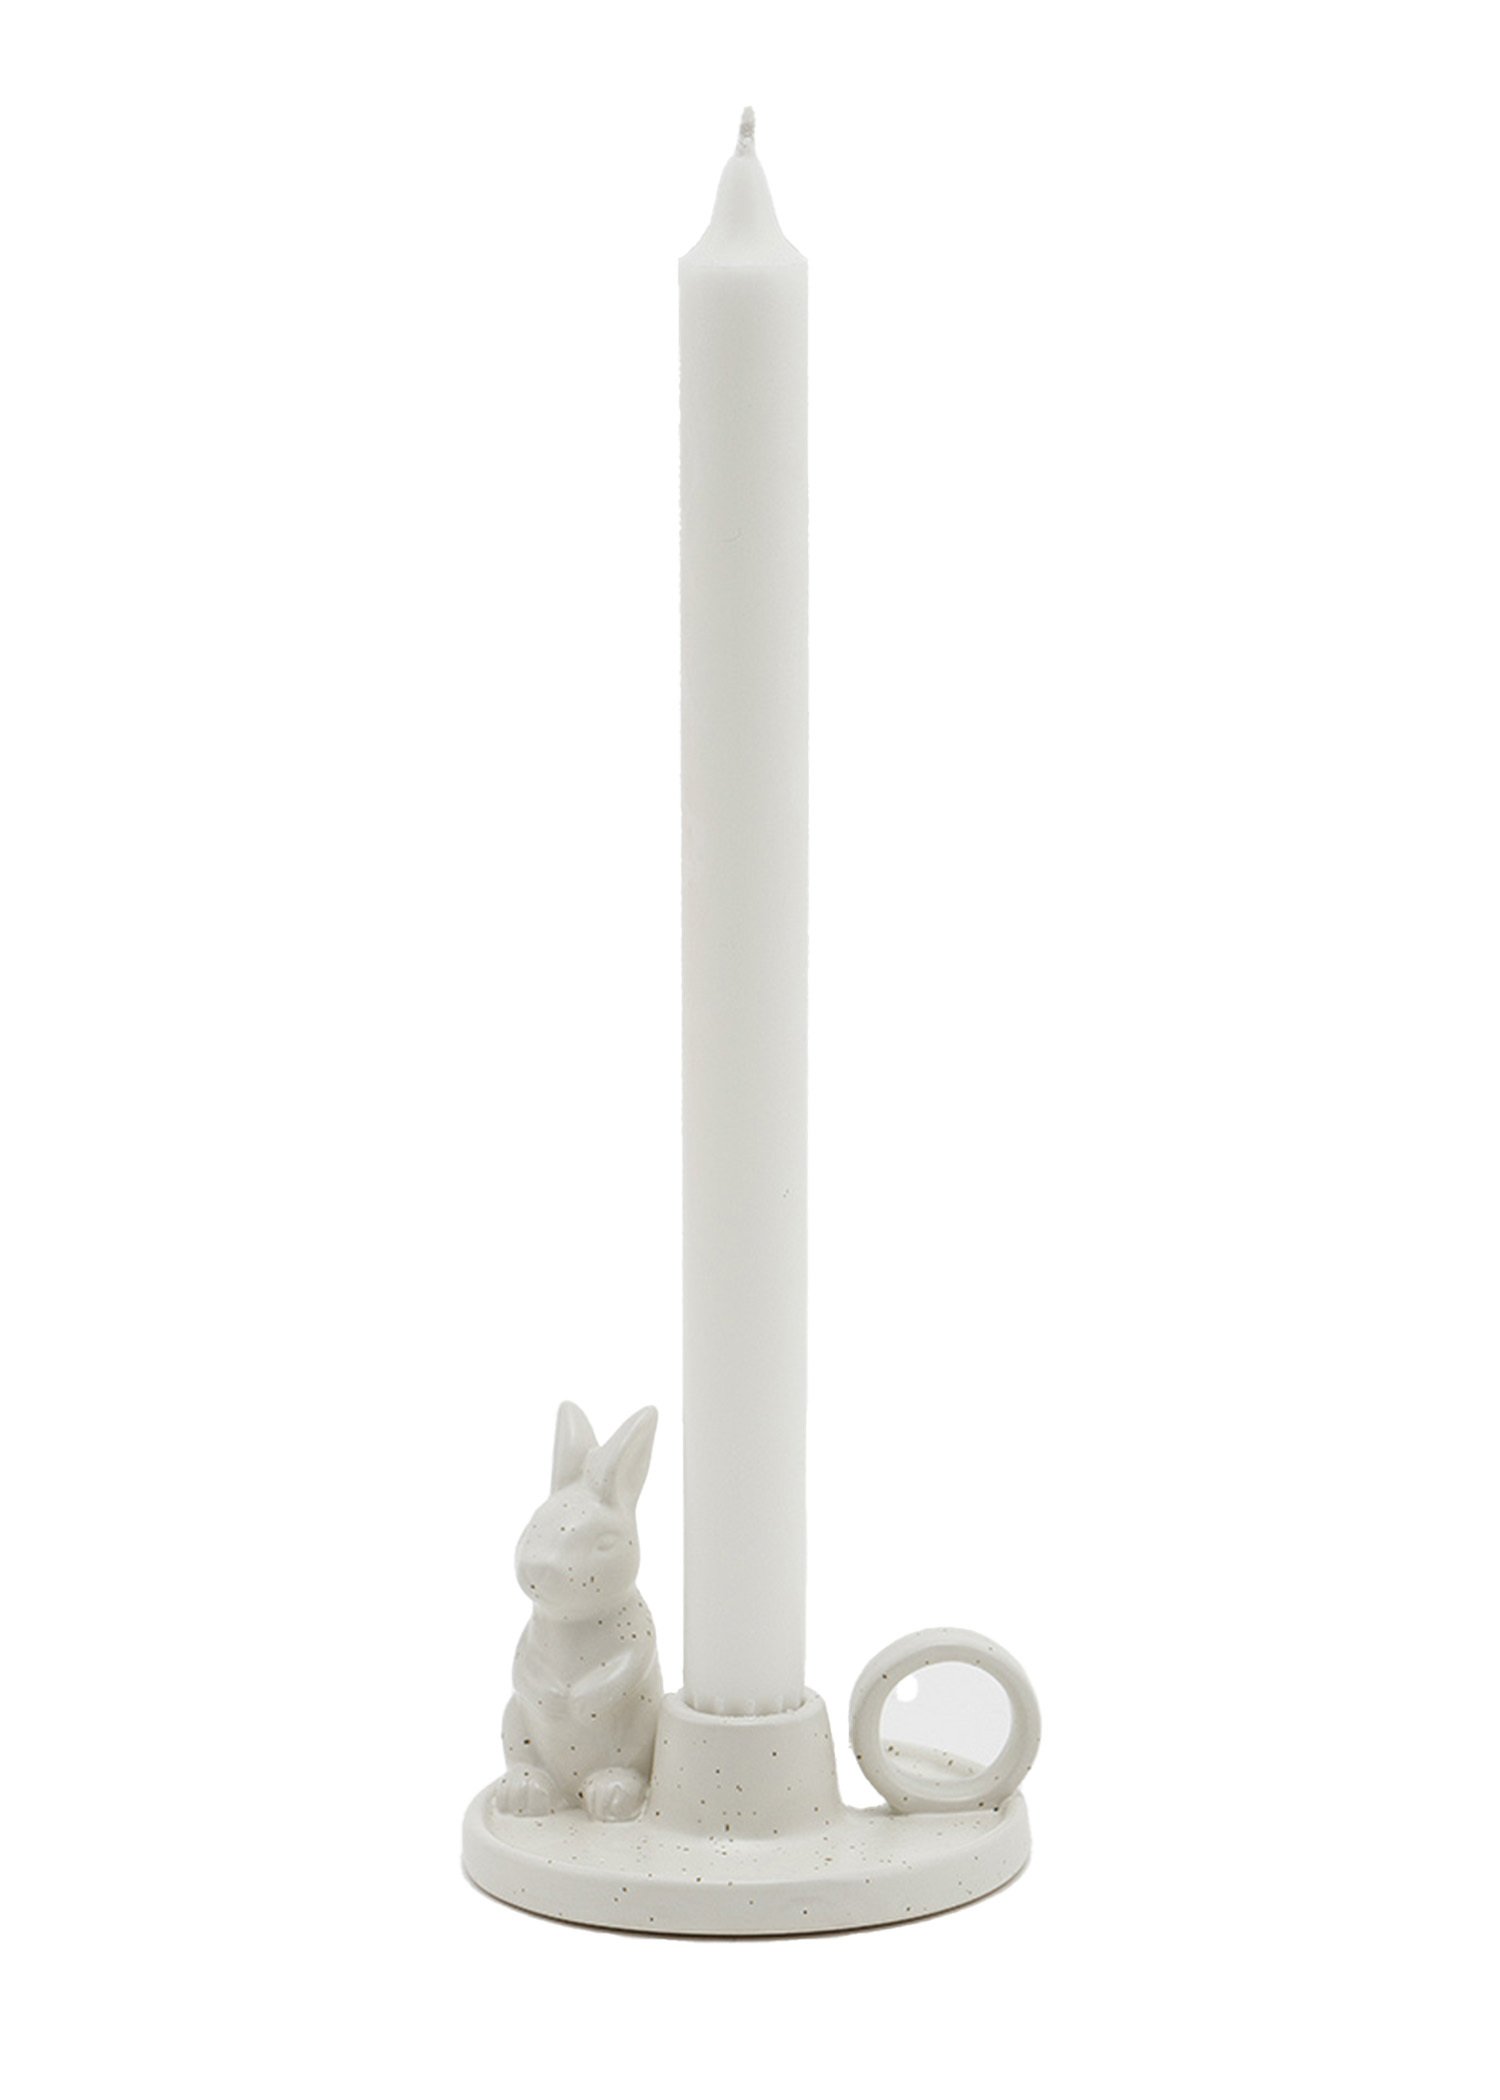 Bunny shaped candle holder